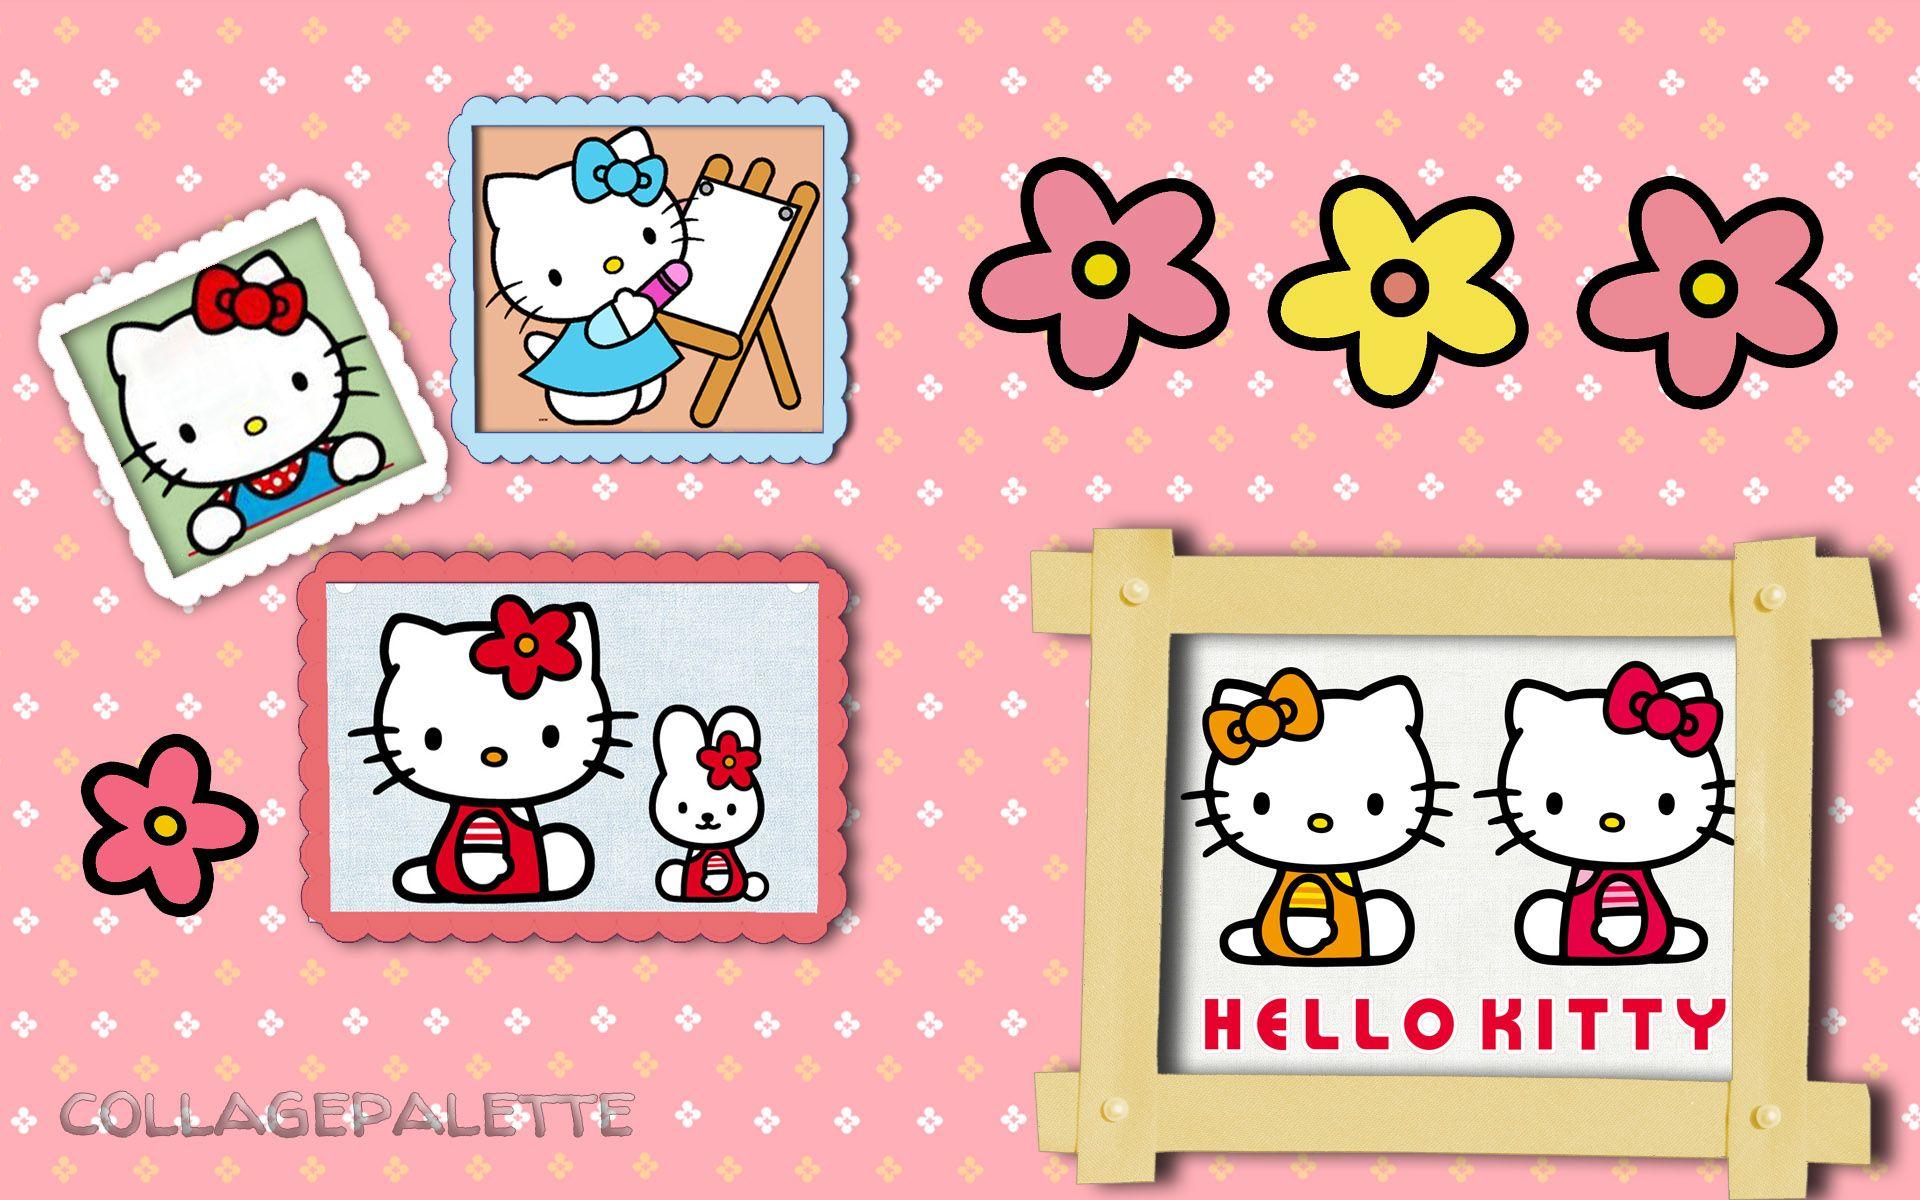 Gambar Hello Kitty Terbaru 2014 2015 Rumah Minimalis Modern